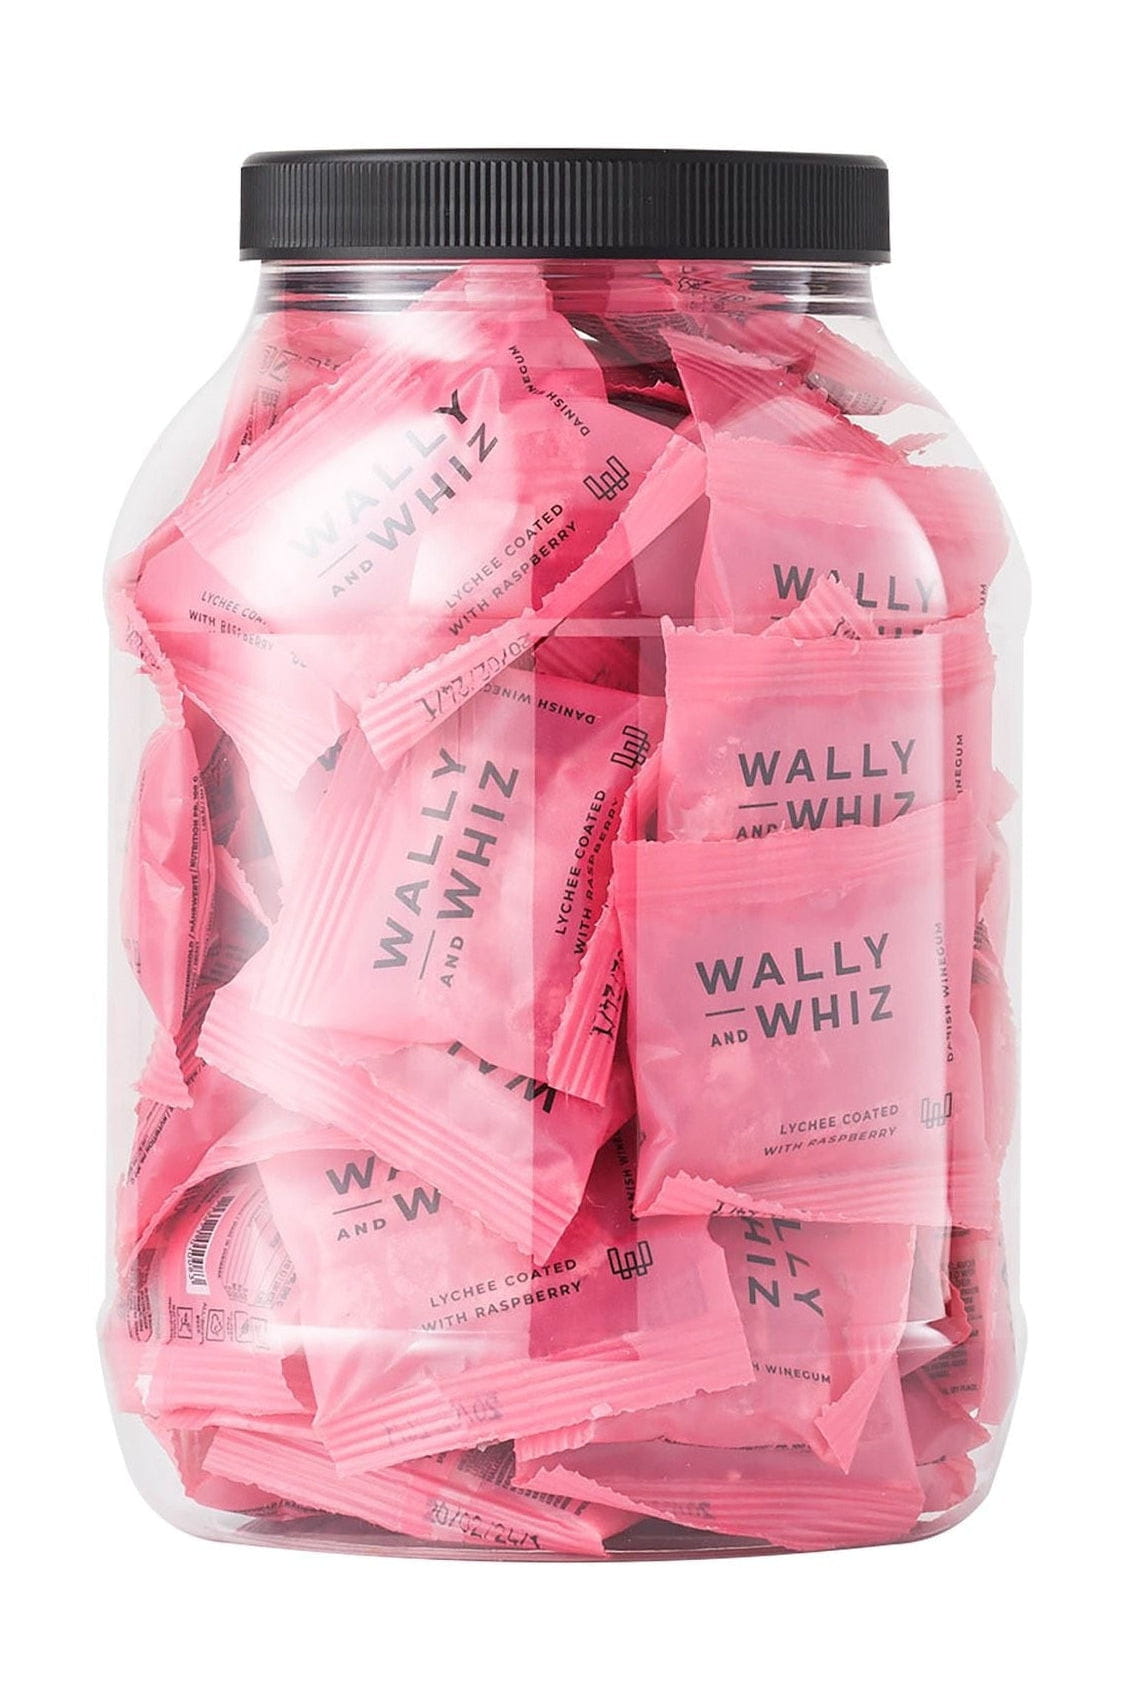 Wally And Whiz Vingummikrukke med 50 flowpacks, lychee med hindbær